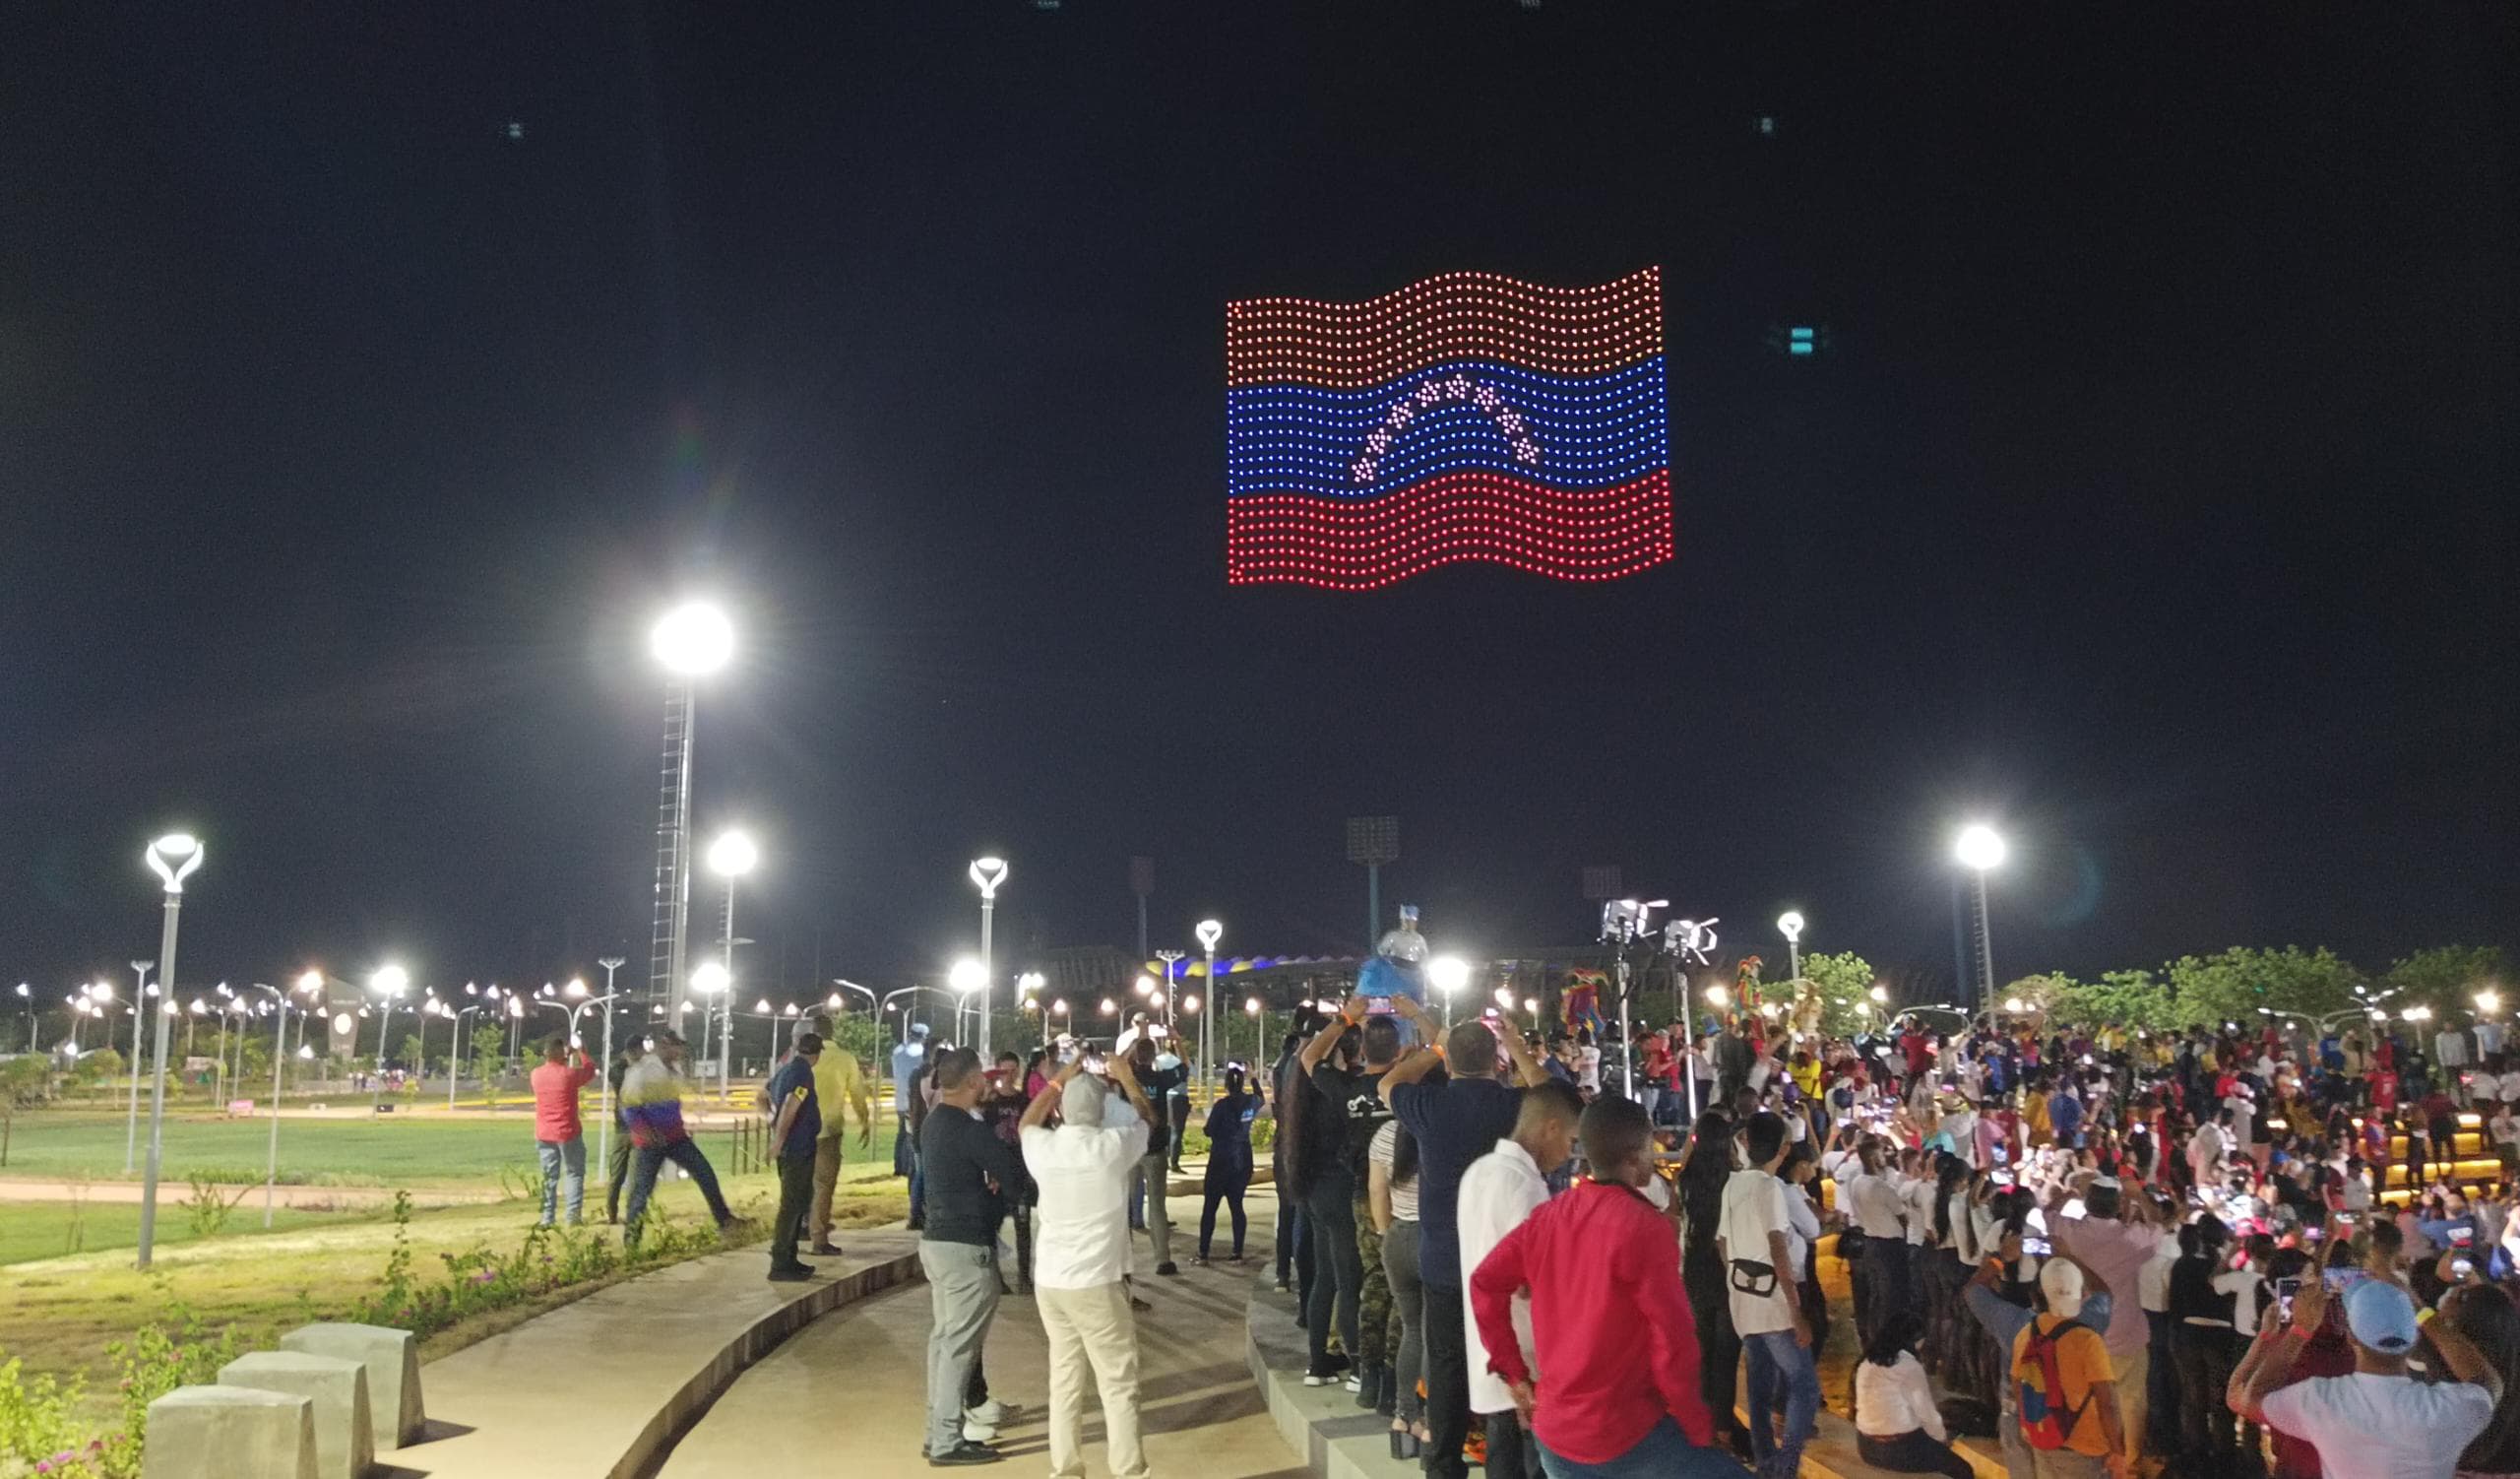 Presidente Nicolás Maduro inauguró segunda etapa del Parque Ana María Campos en Maracaibo